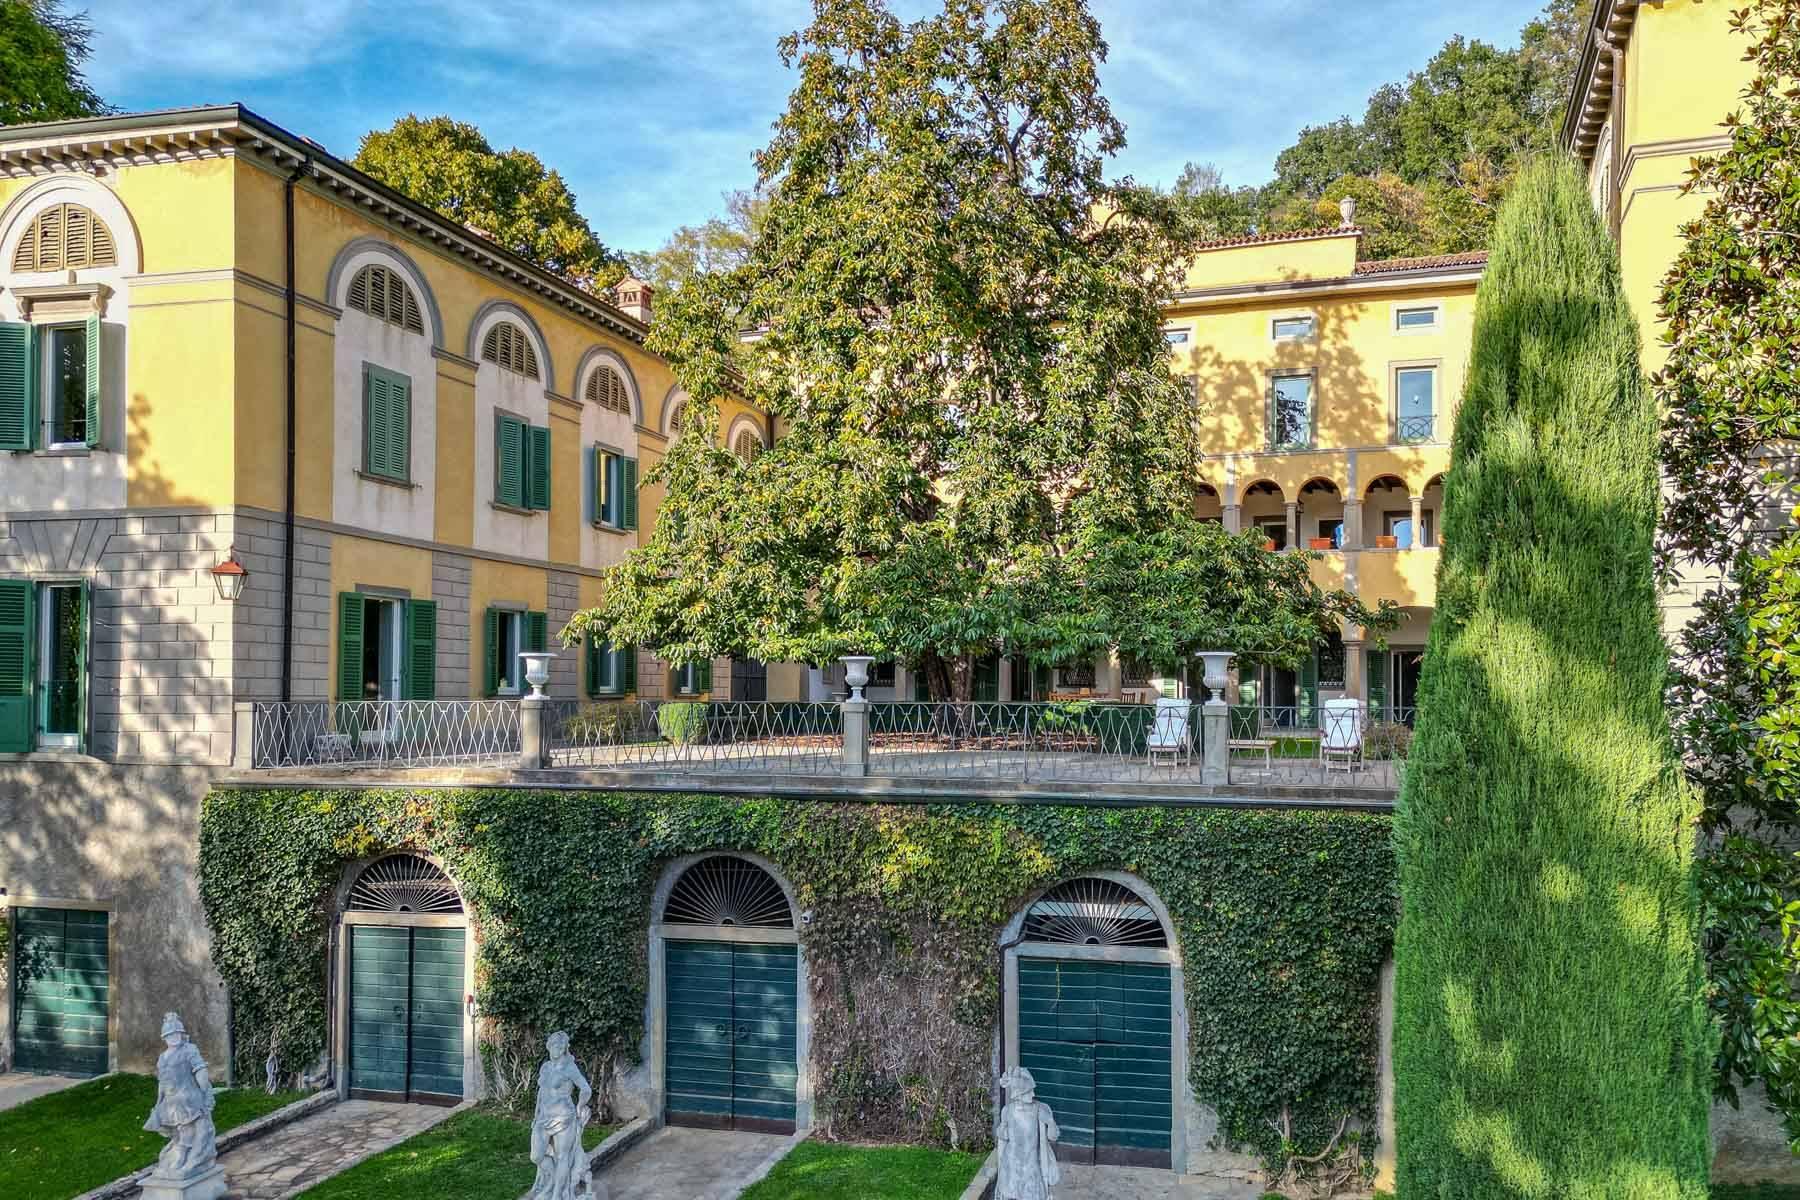 Splendid historic villa with park - 2